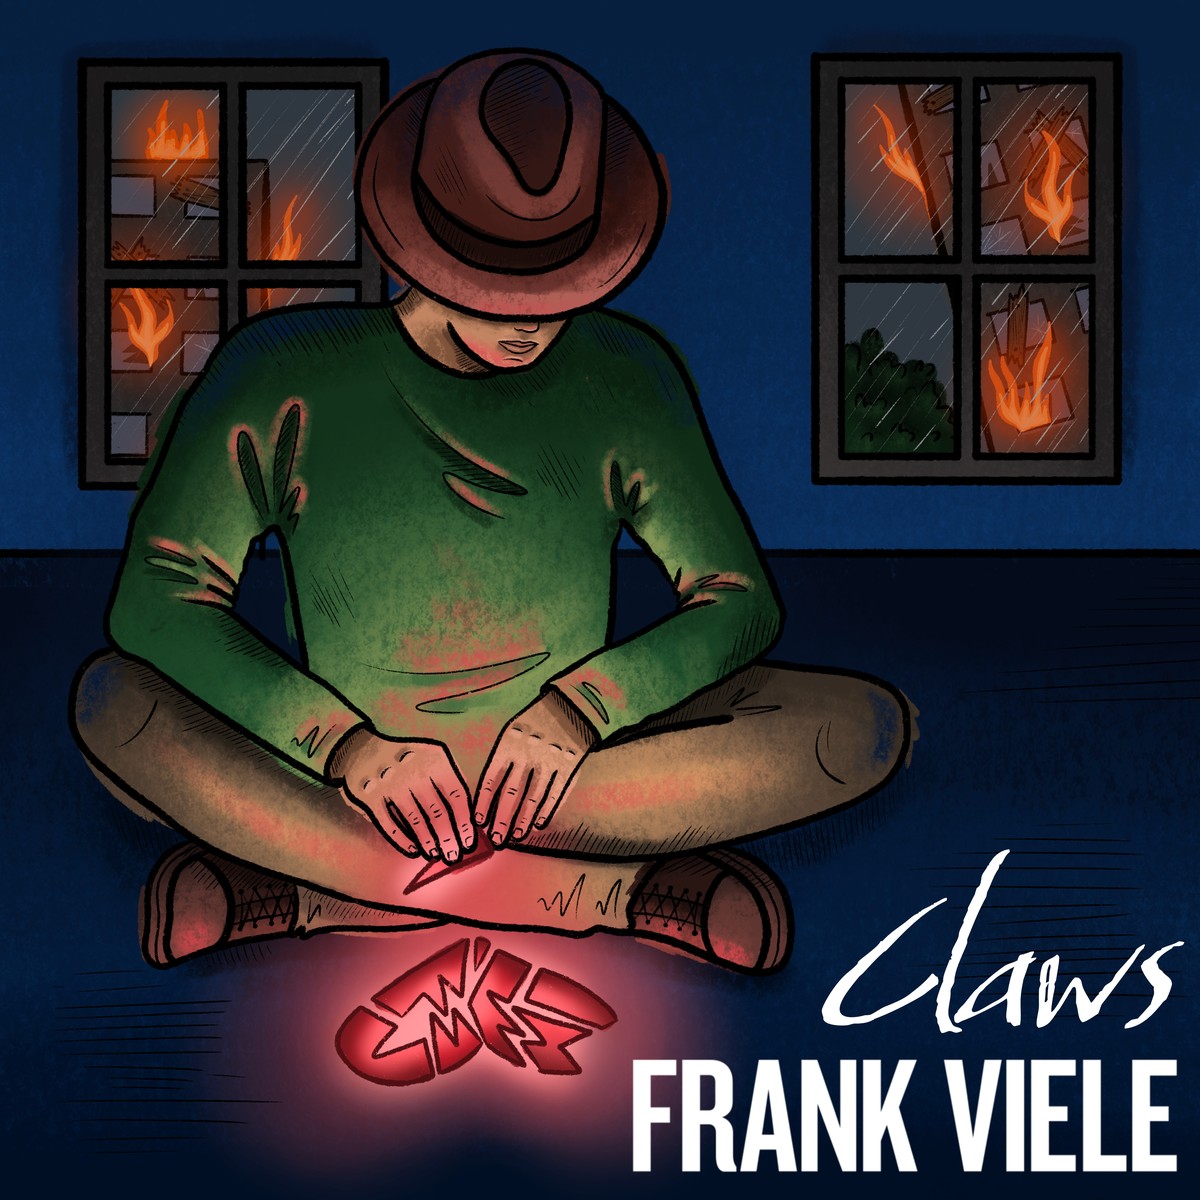 Frank Viele “Claws” single artwork